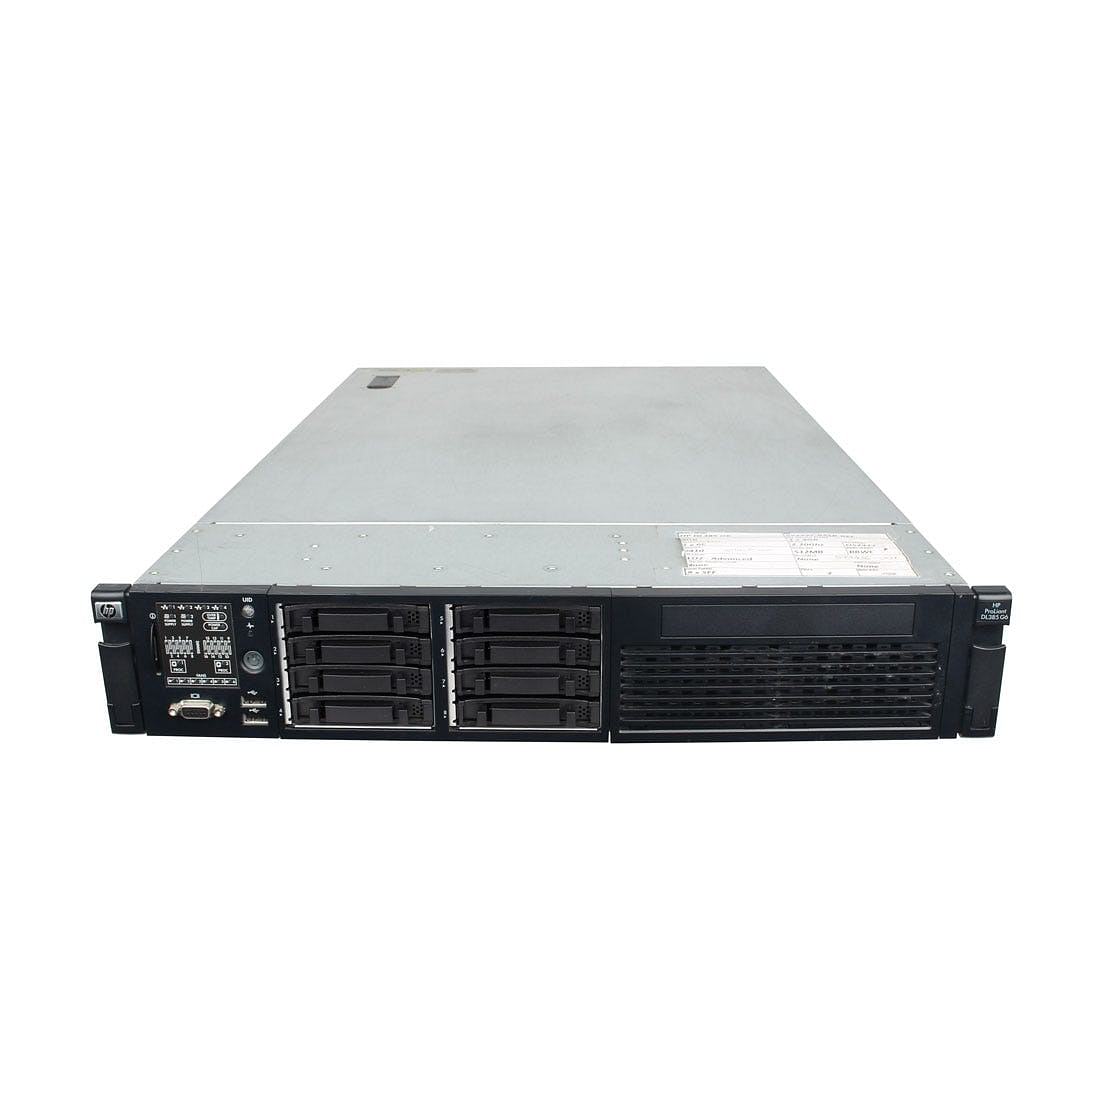 

HP ProLiant DL385 G6 Server